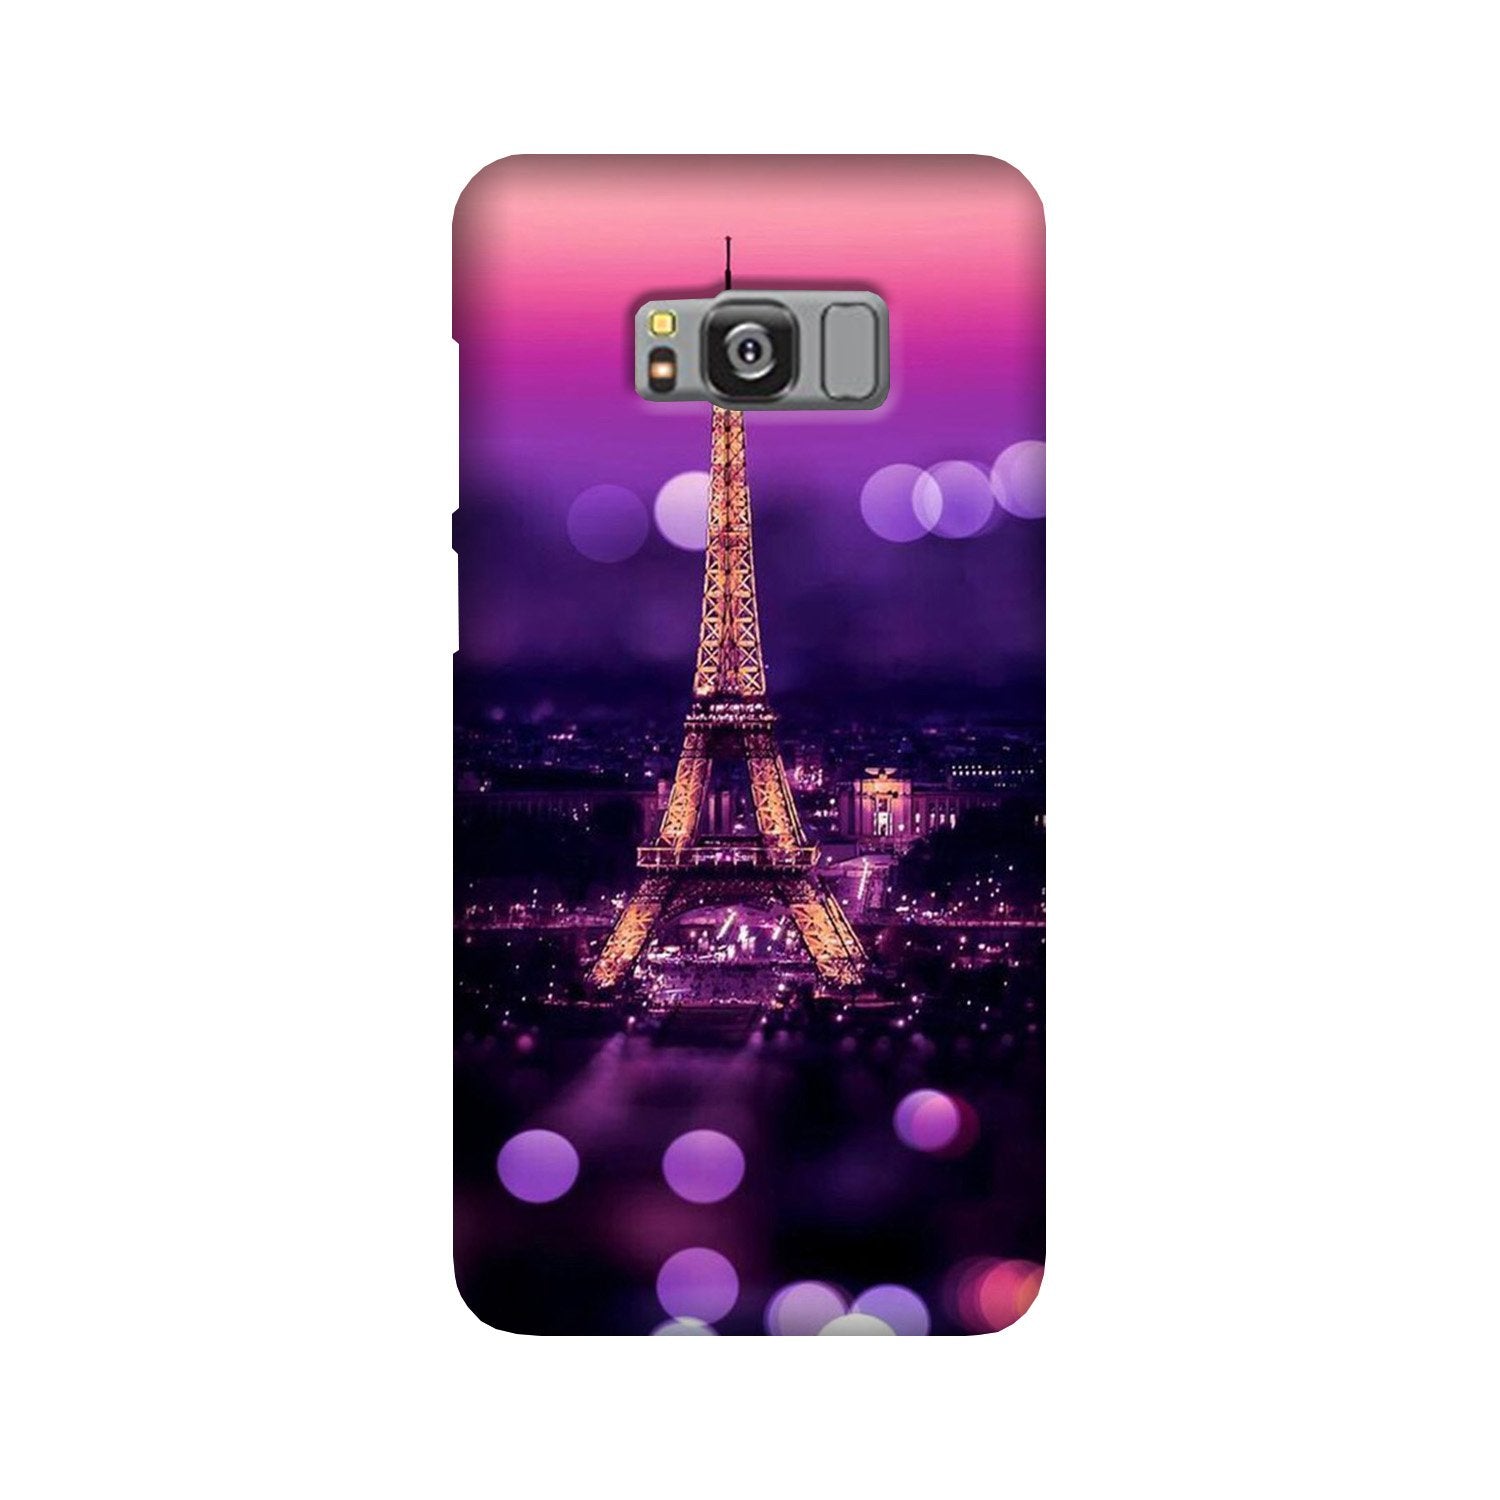 Eiffel Tower Case for Galaxy S8